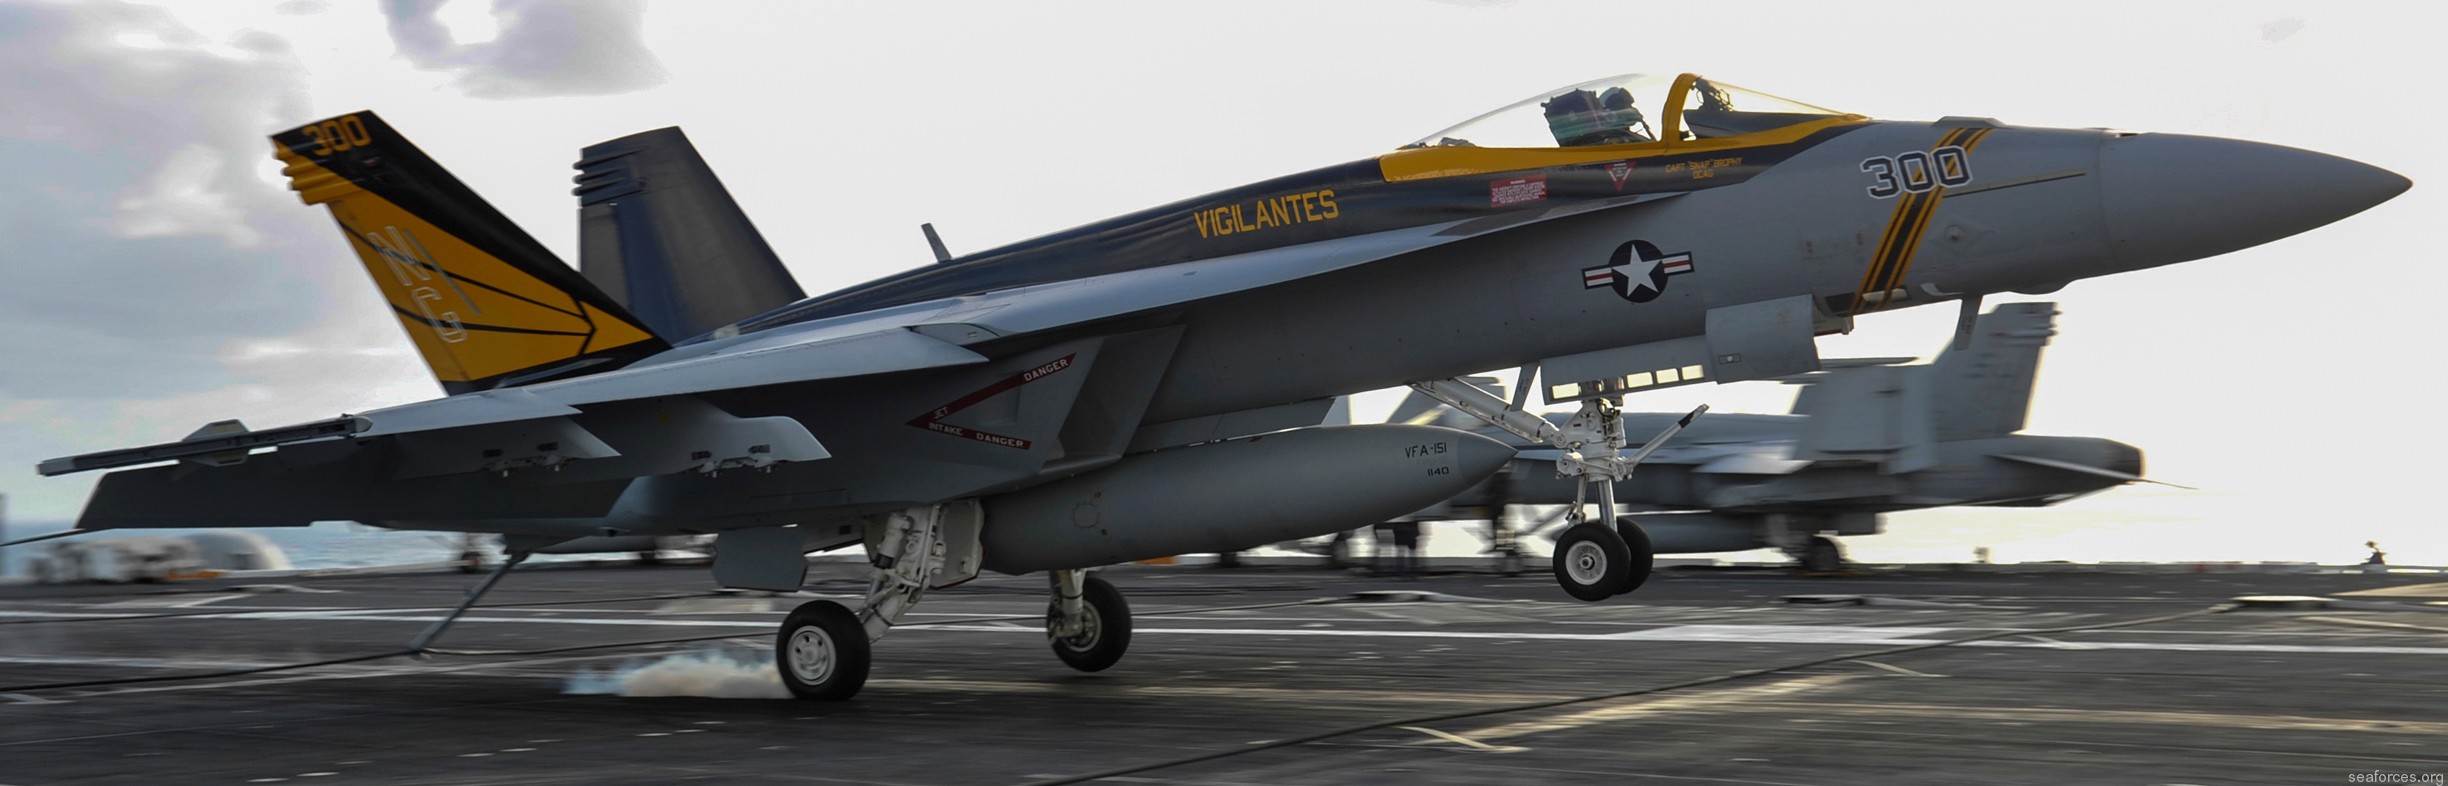 vfa-151 vigilantes strike fighter squadron navy f/a-18e super hornet carrier air wing cvw-9 uss carl vinson cvn-70 17